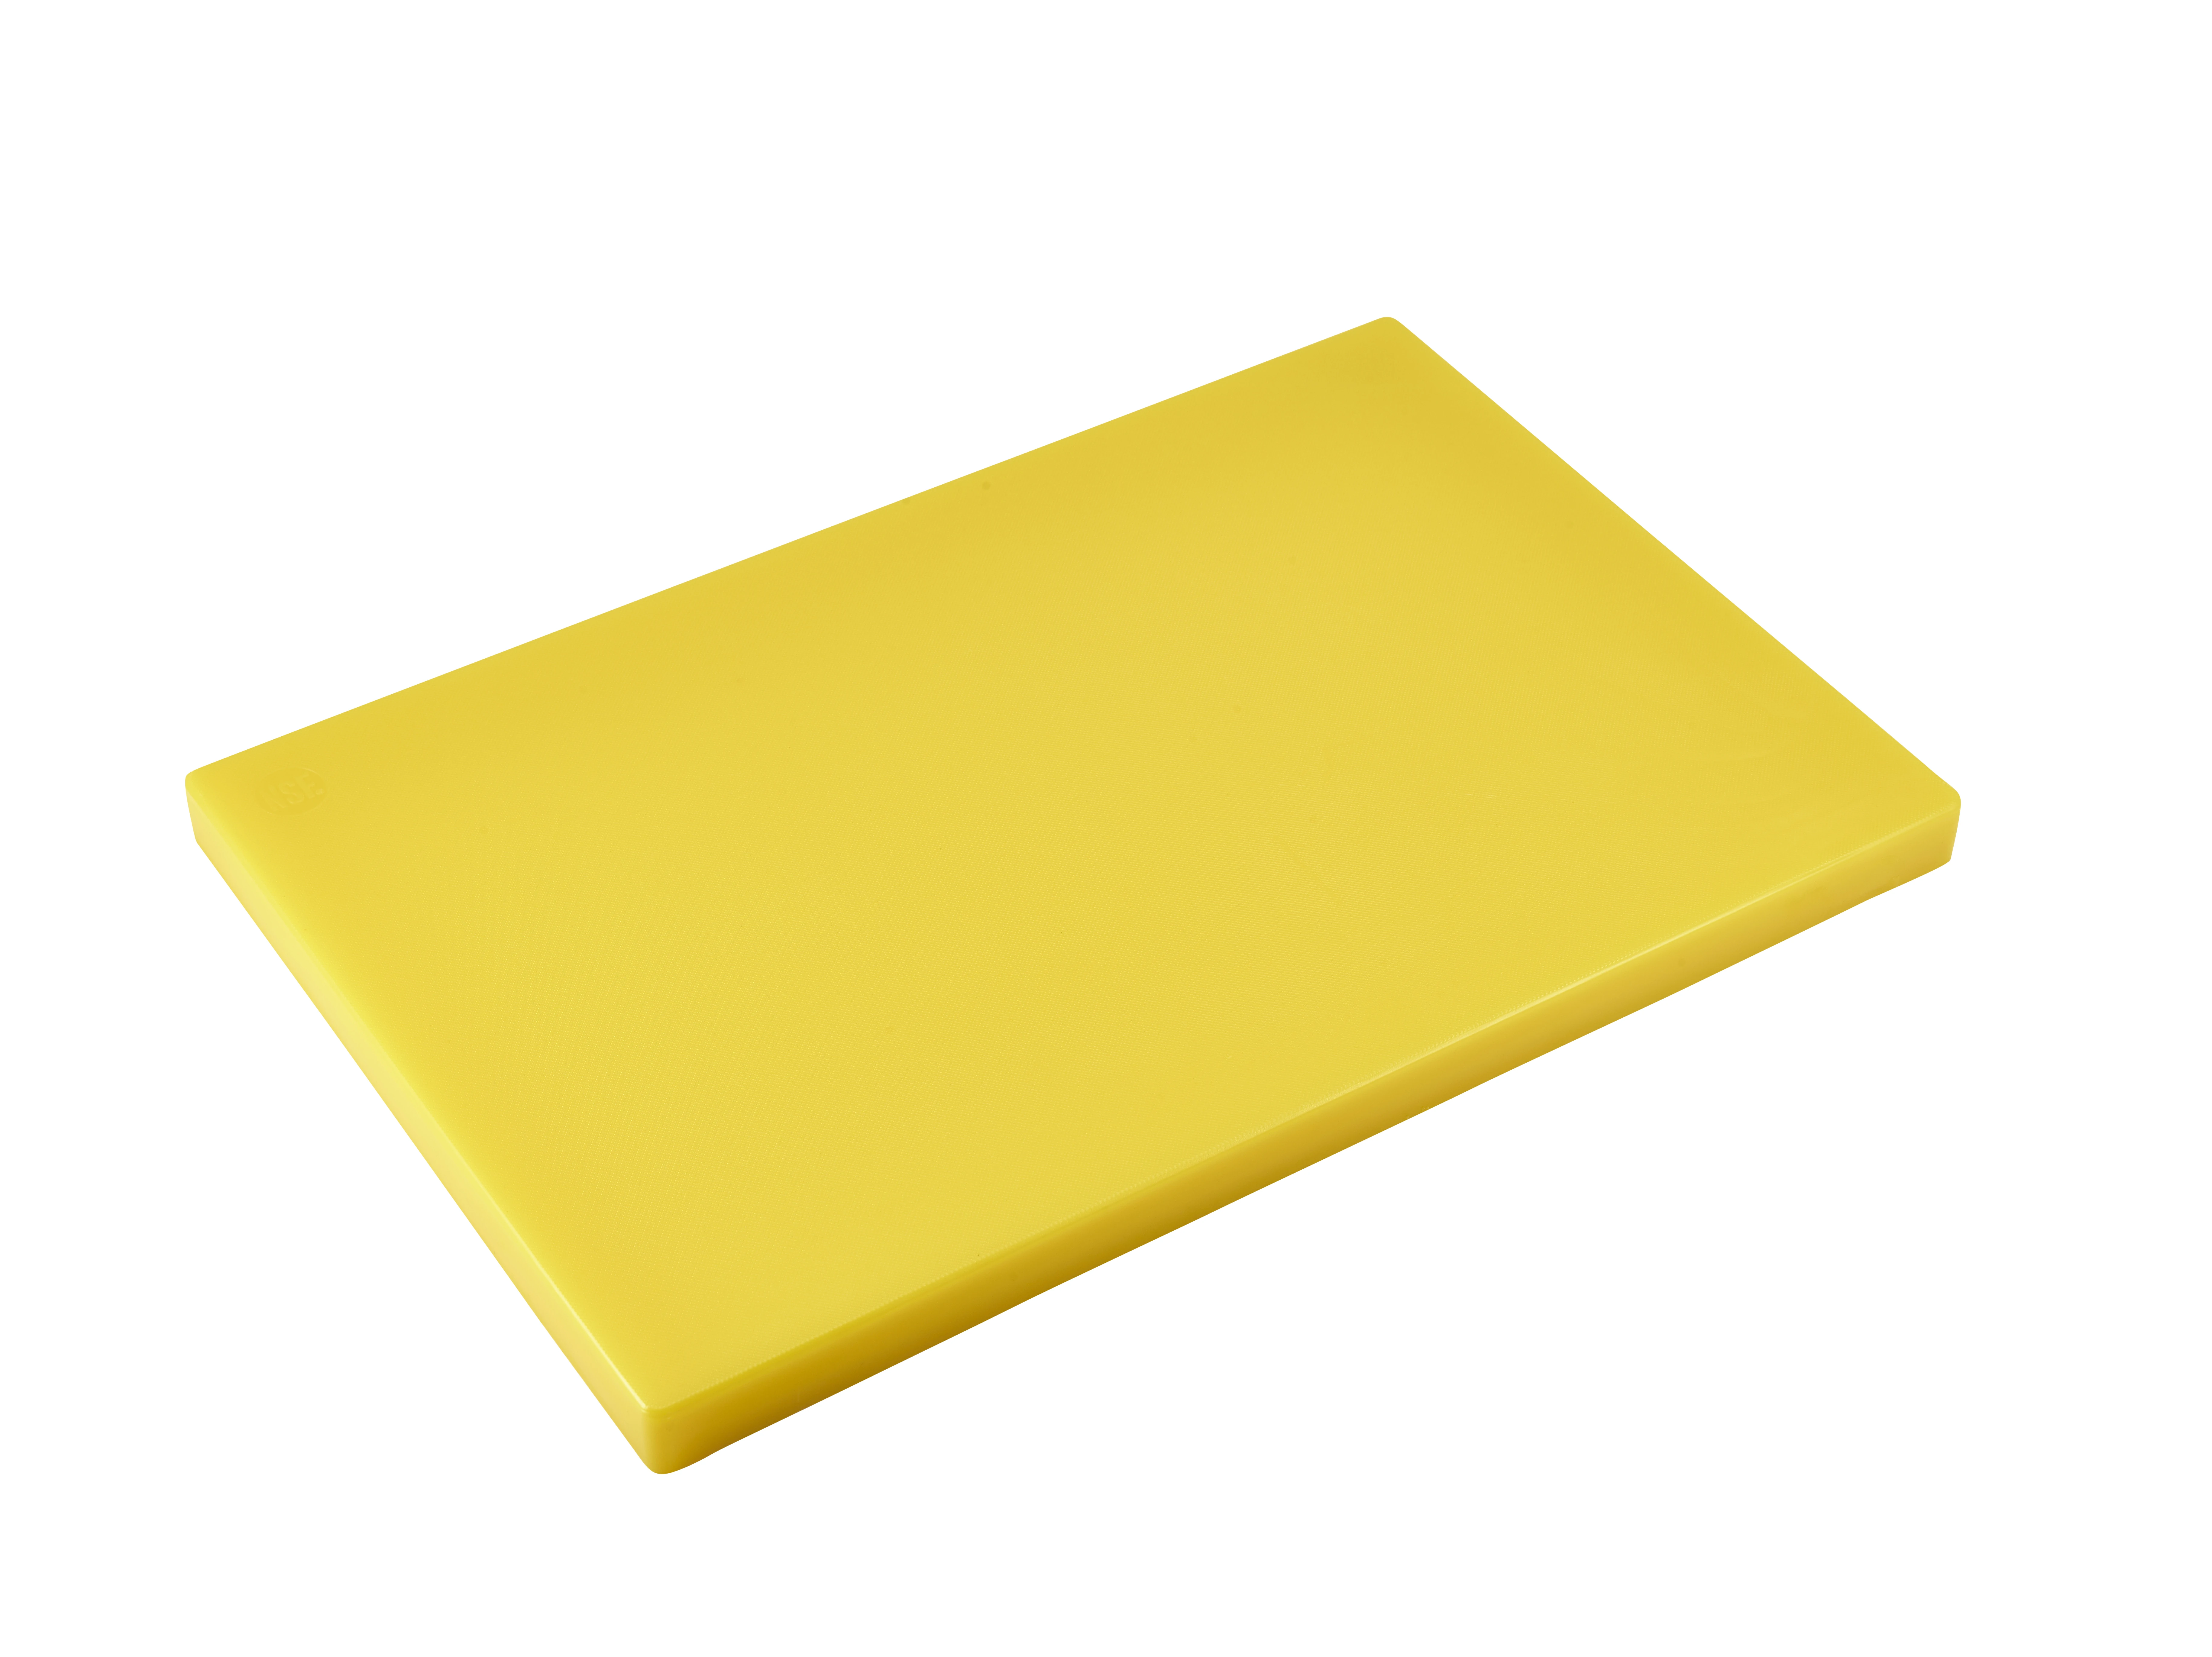 GenWare Yellow Low Density Chopping Board 18 x 12 x 1"